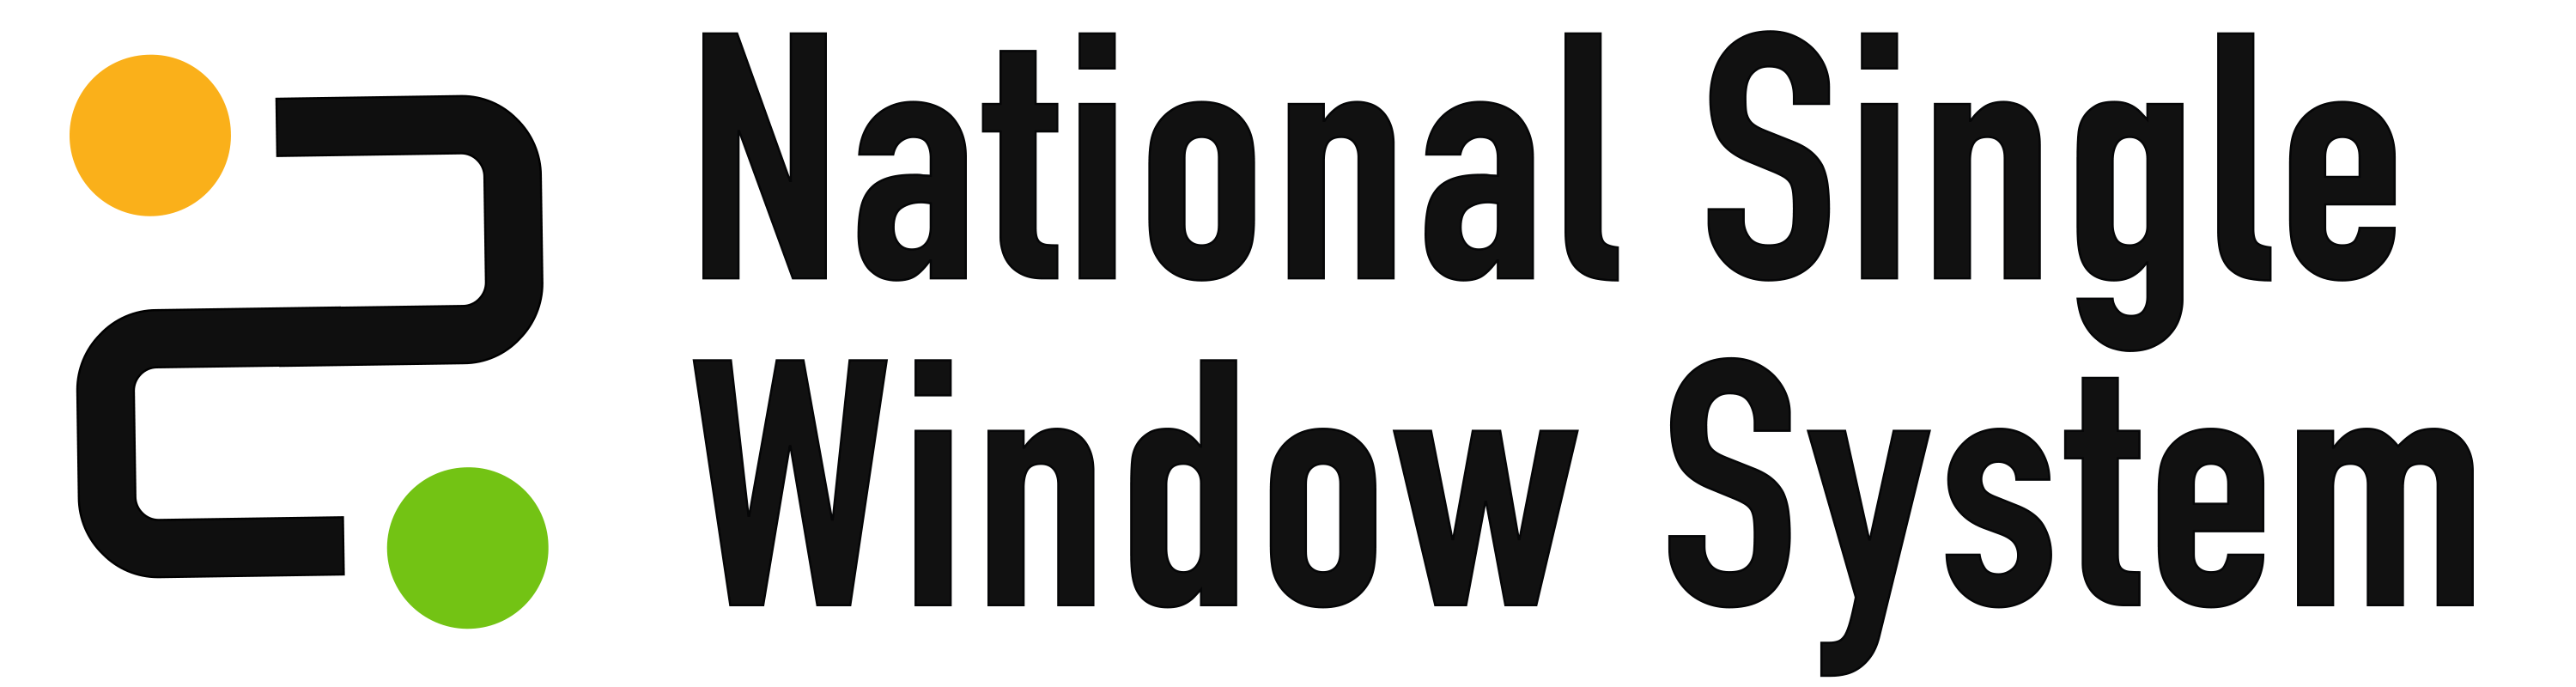 National Single Window System logo